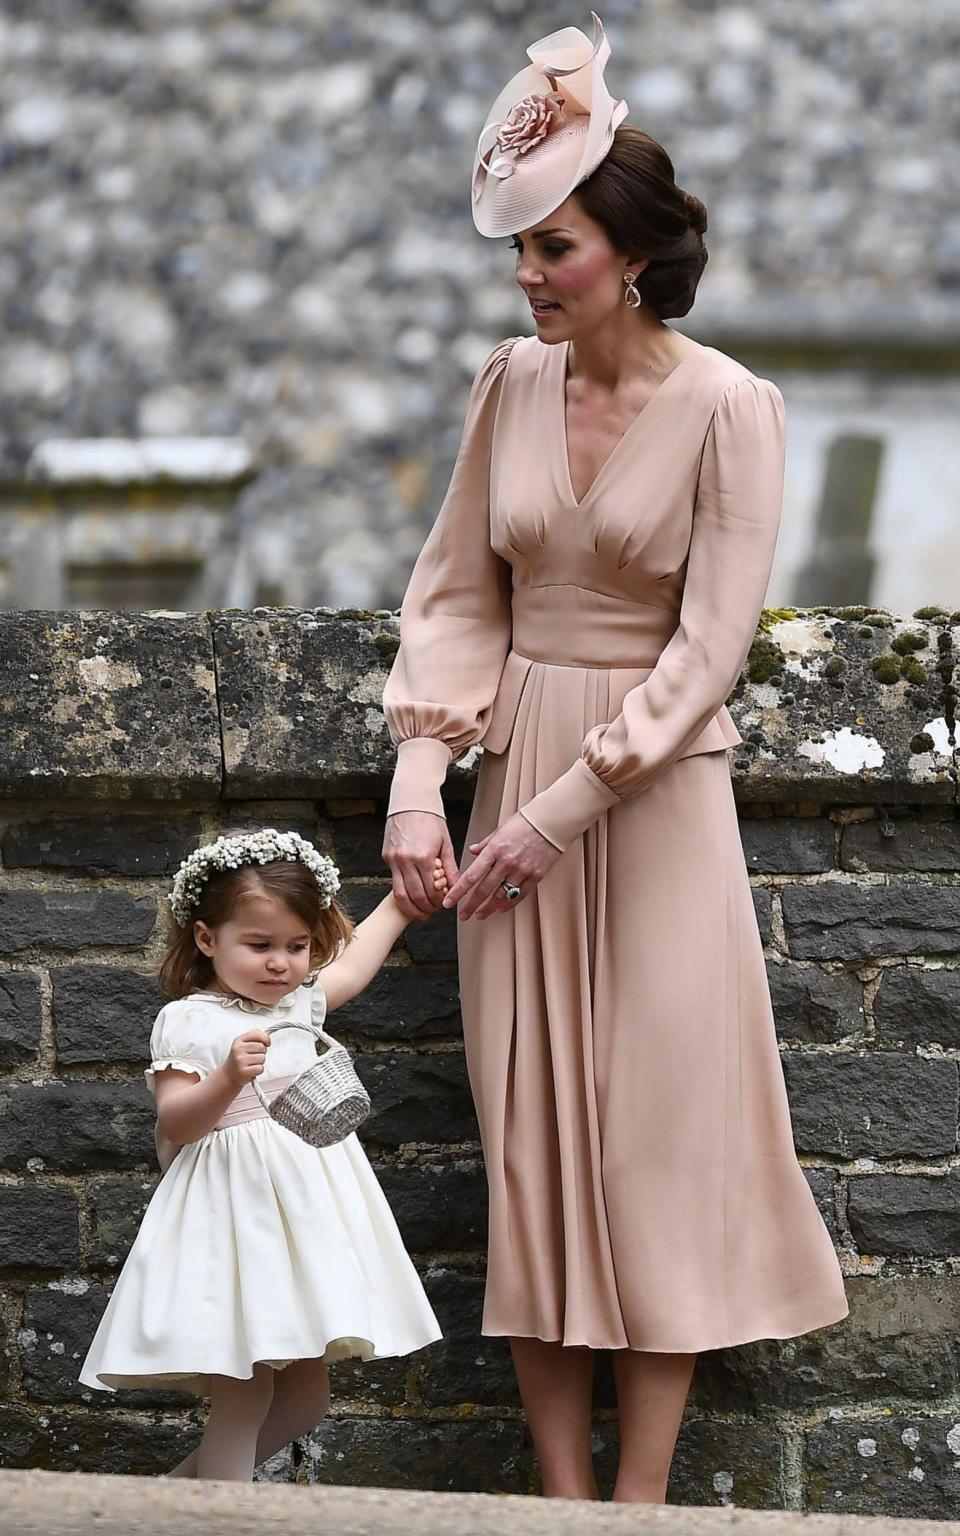 The Duchess of Cambridge and Princess Charlotte - Credit: Justin Tallis /AFP